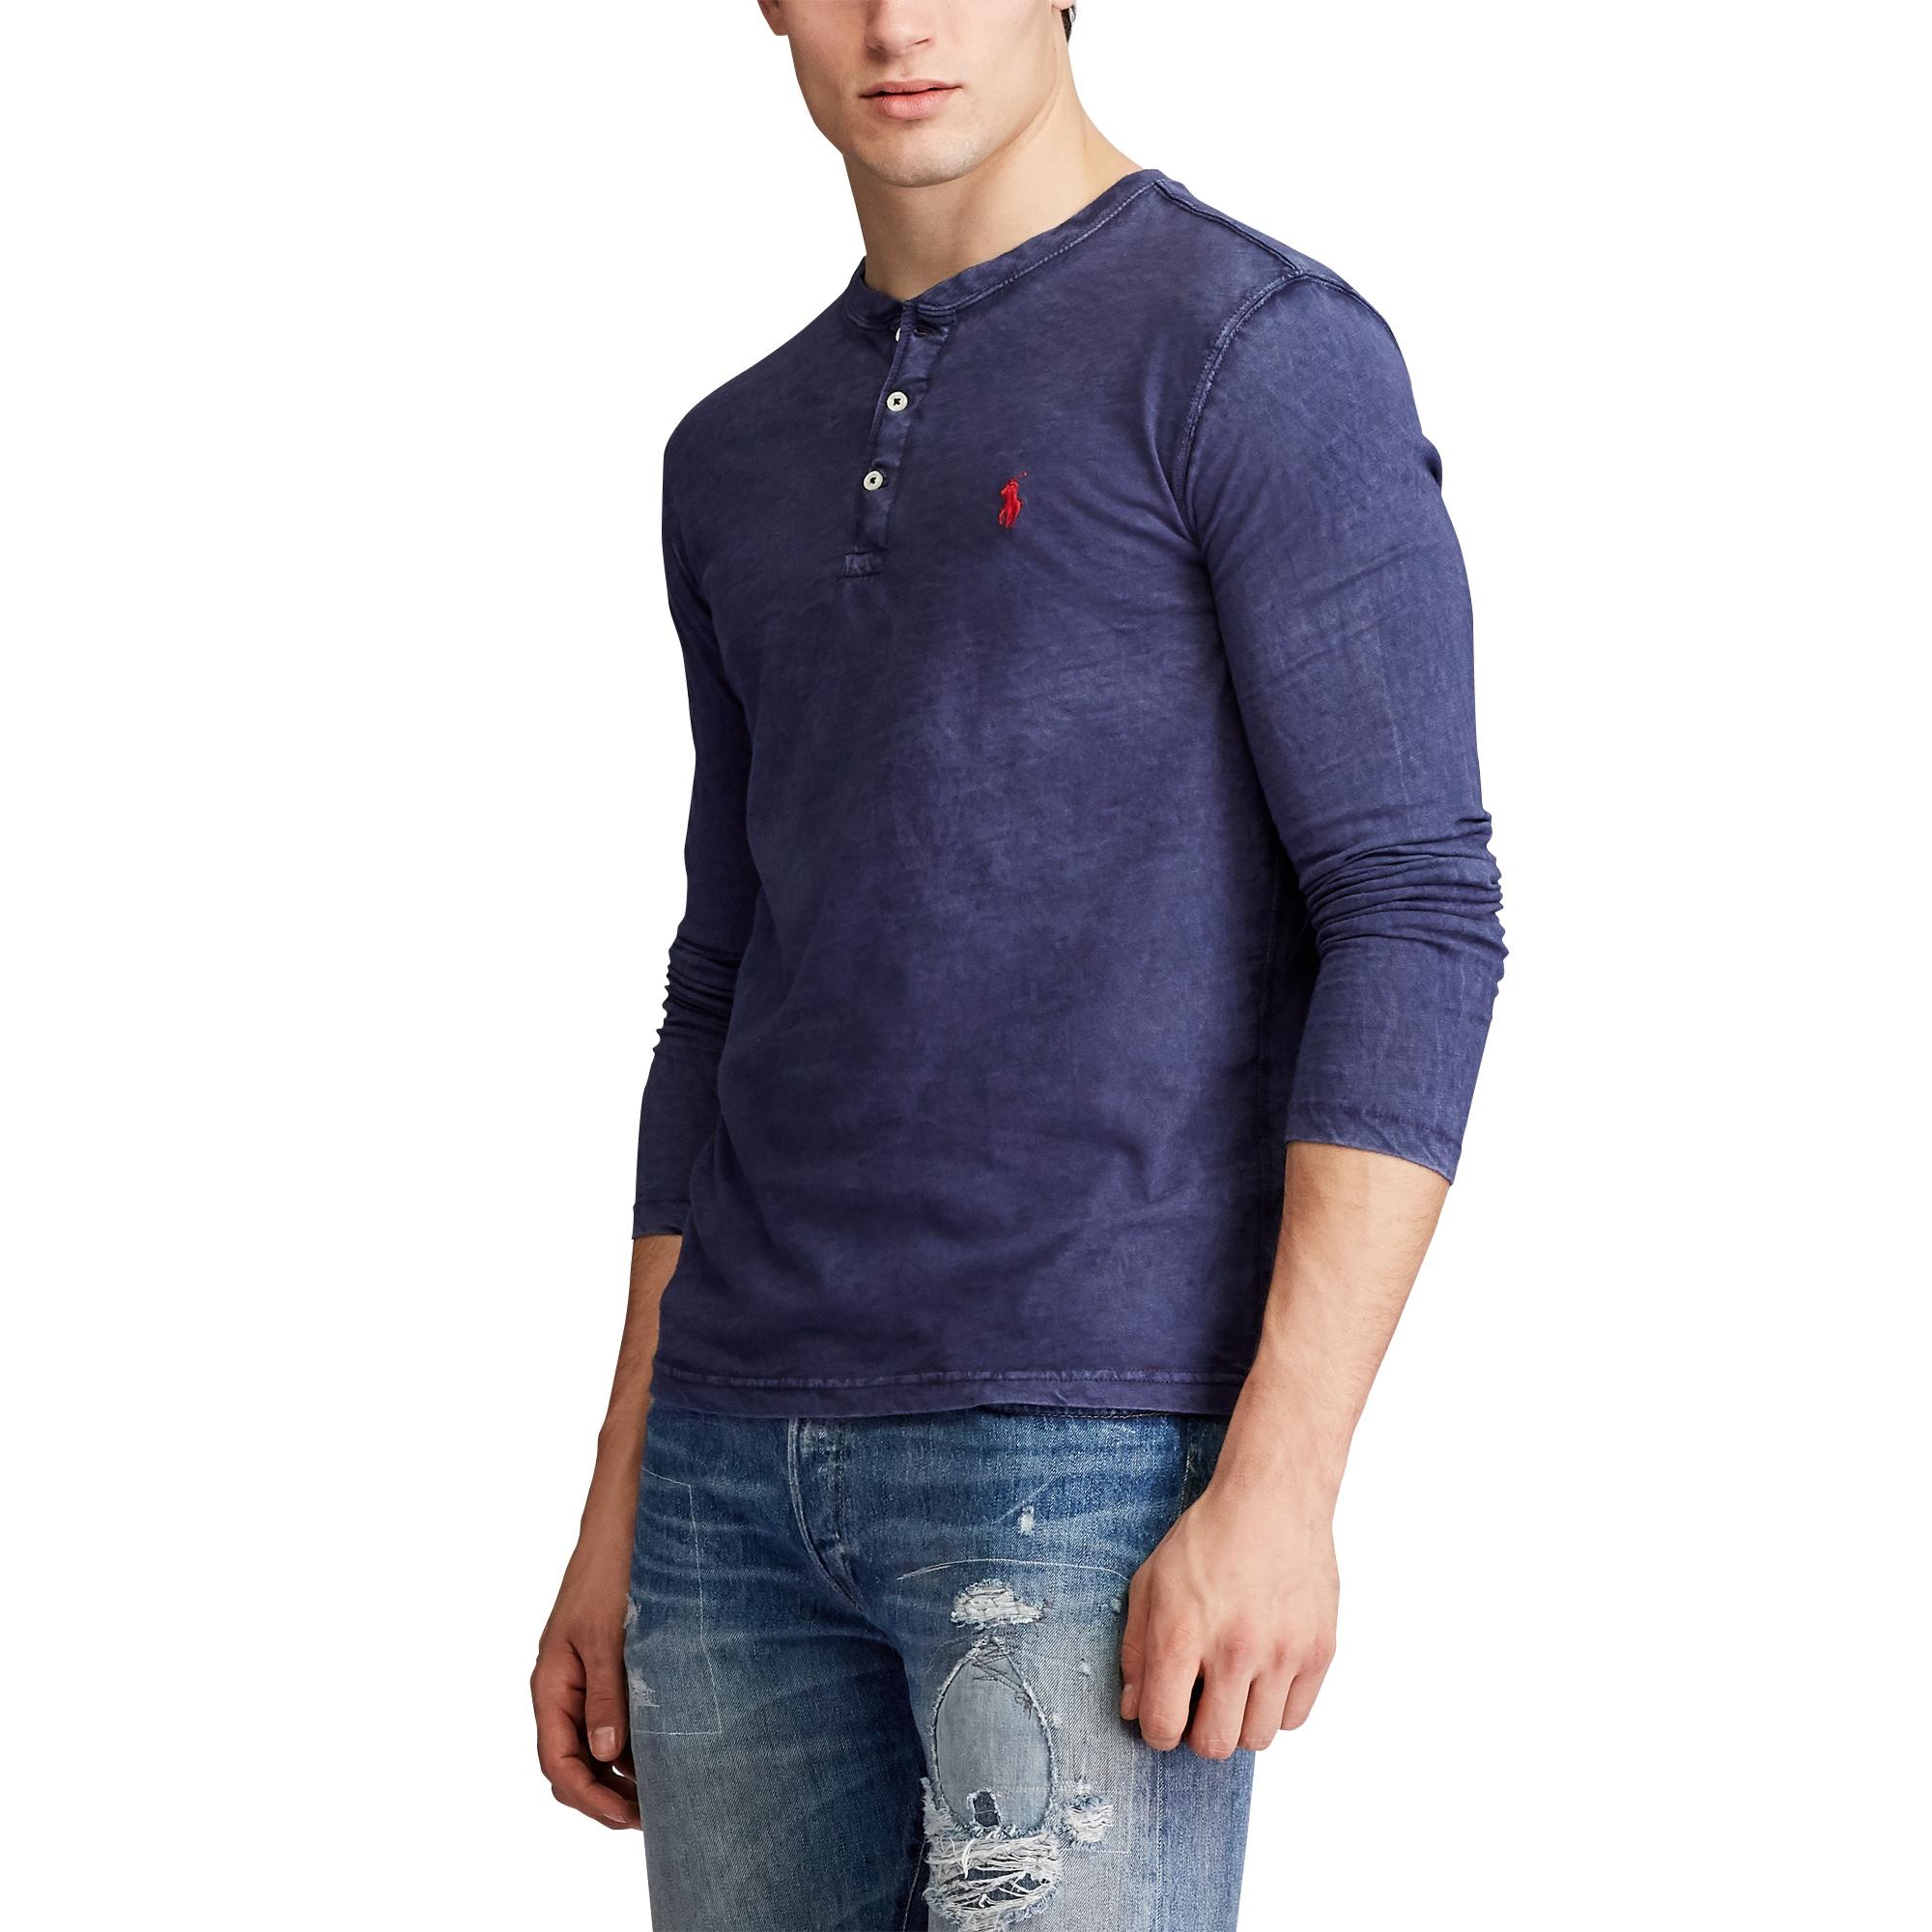 Polo Ralph Lauren Cotton Slub Jersey Henley Shirt in Blue for Men - Lyst